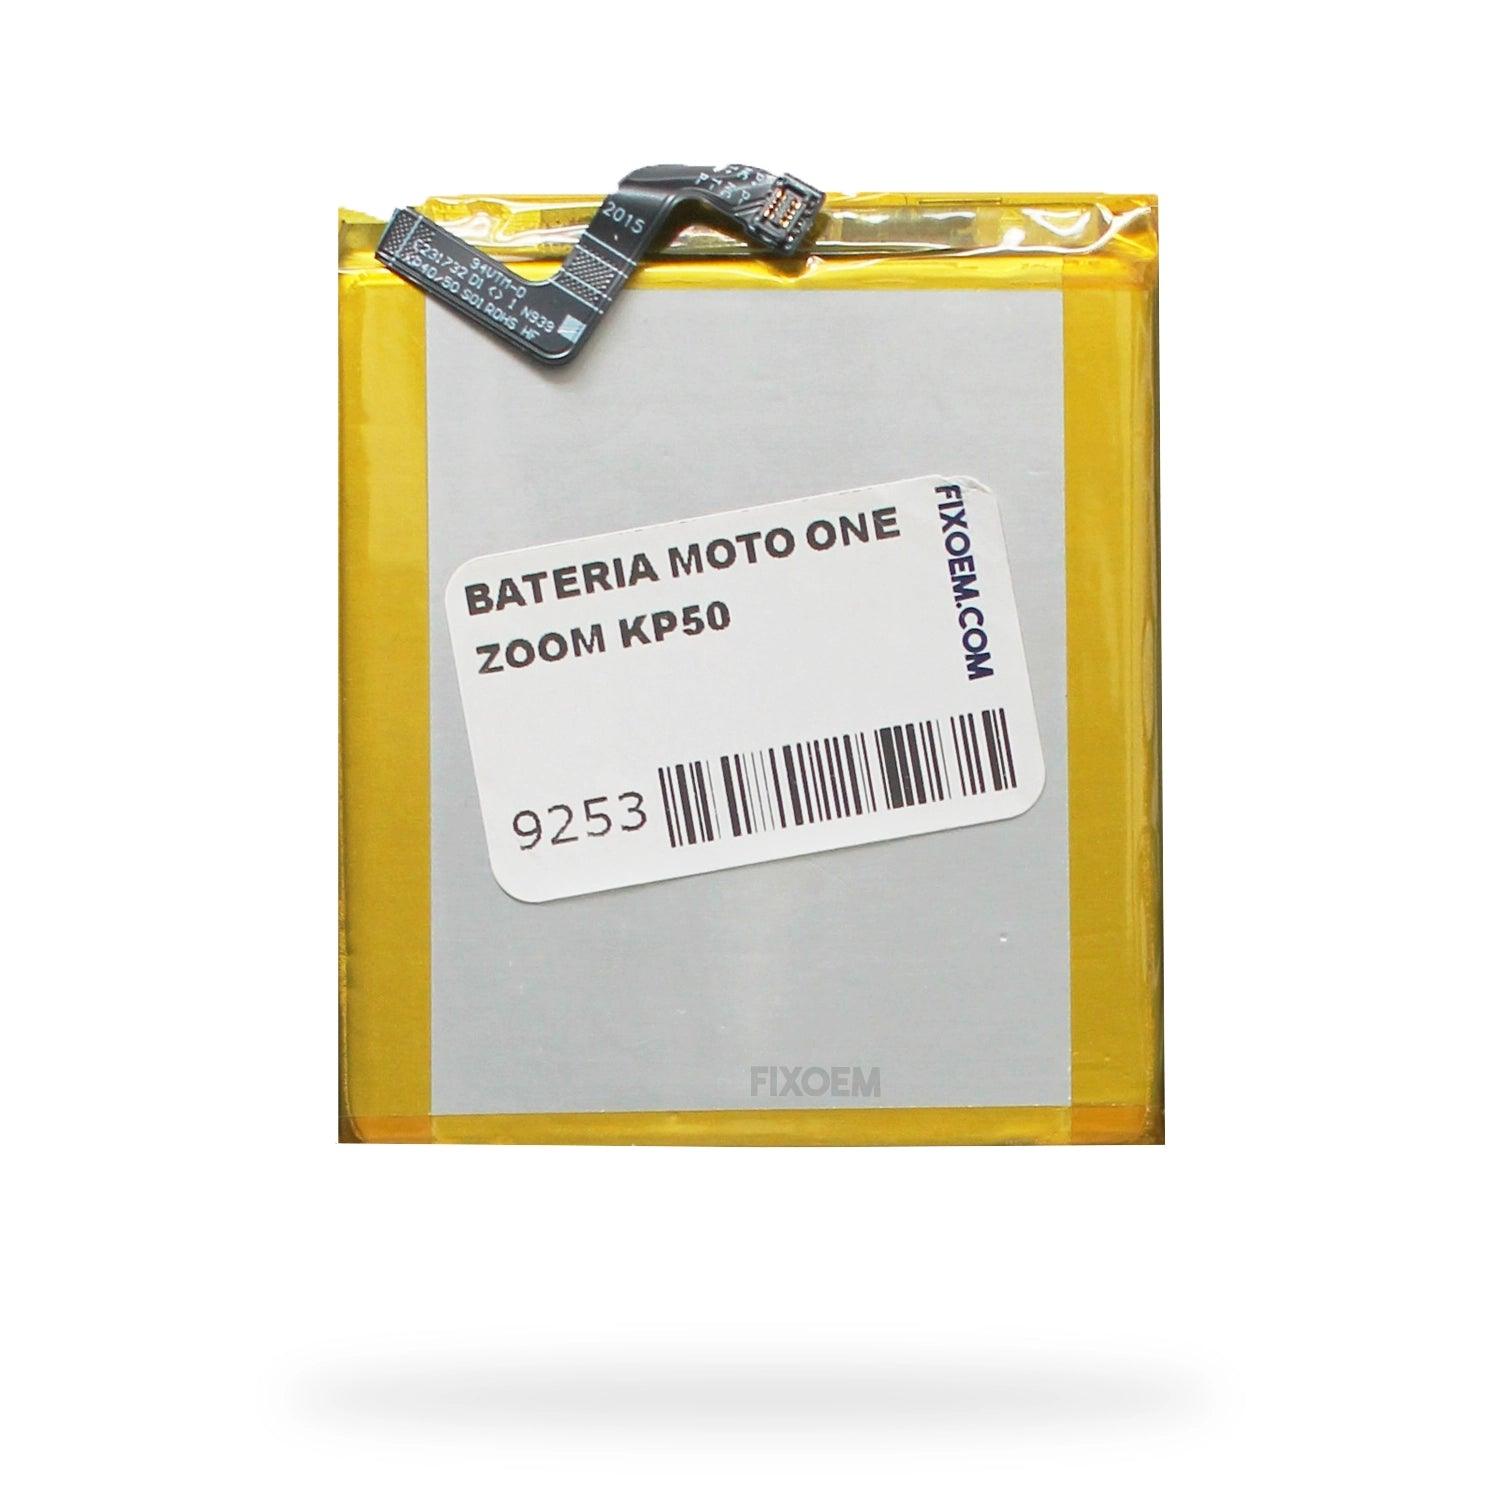 Bateria Moto One Zoom Xt2010 Kp50. |+2,000 reseñas 4.8/5 ⭐